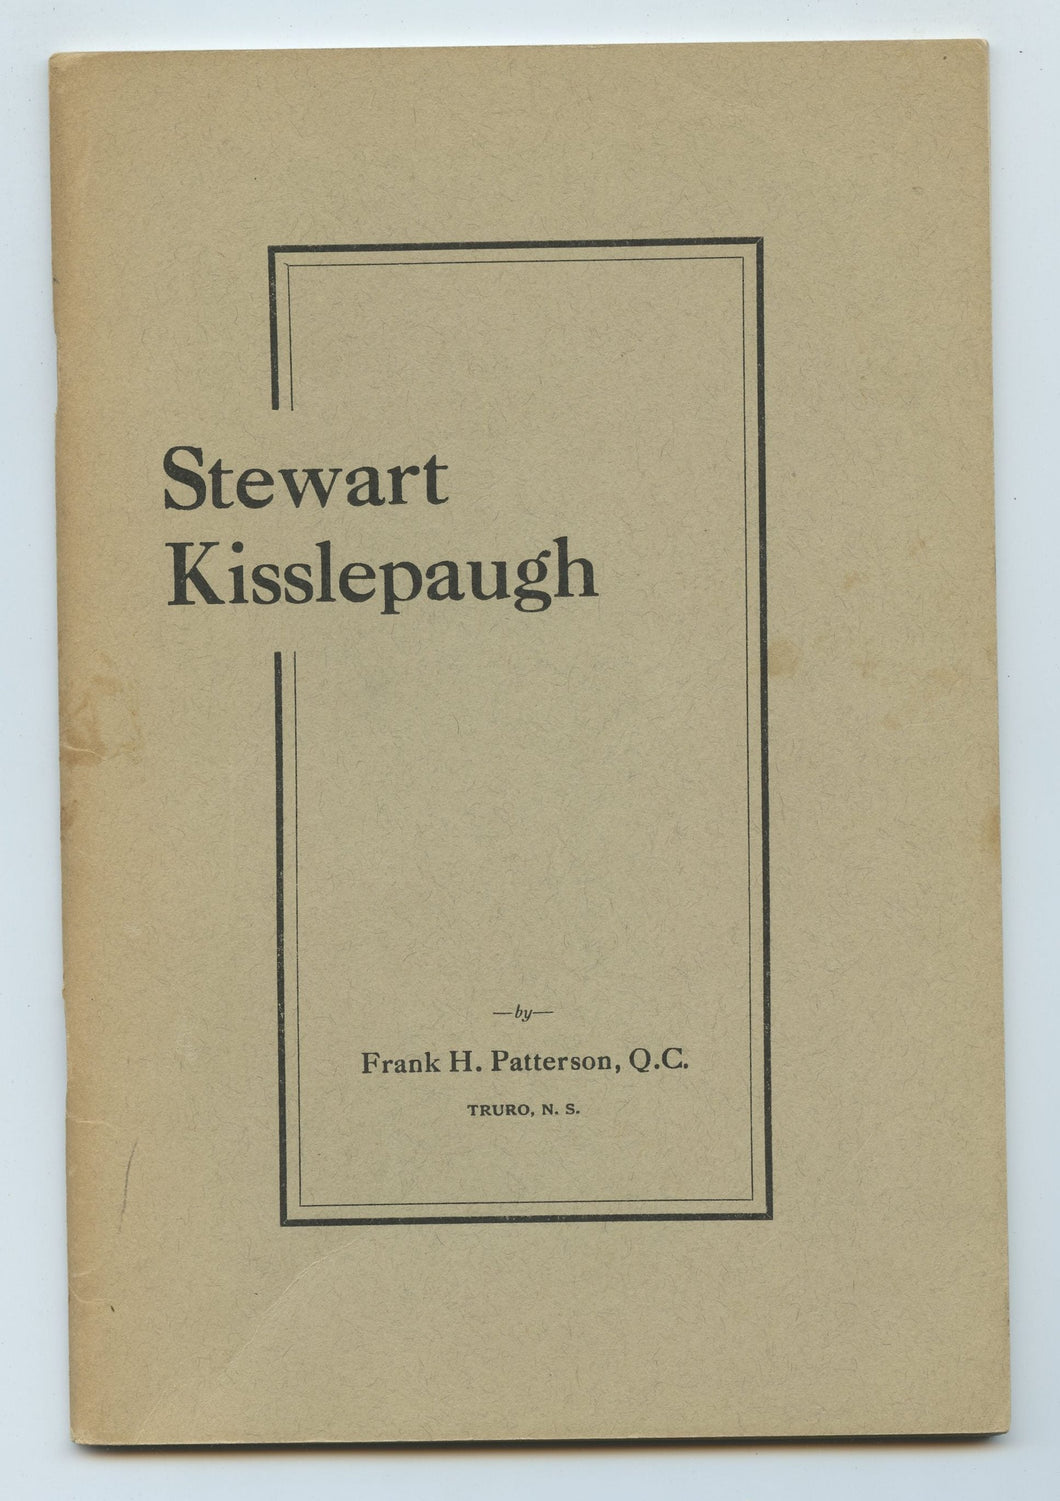 Stewart Kisslepaugh